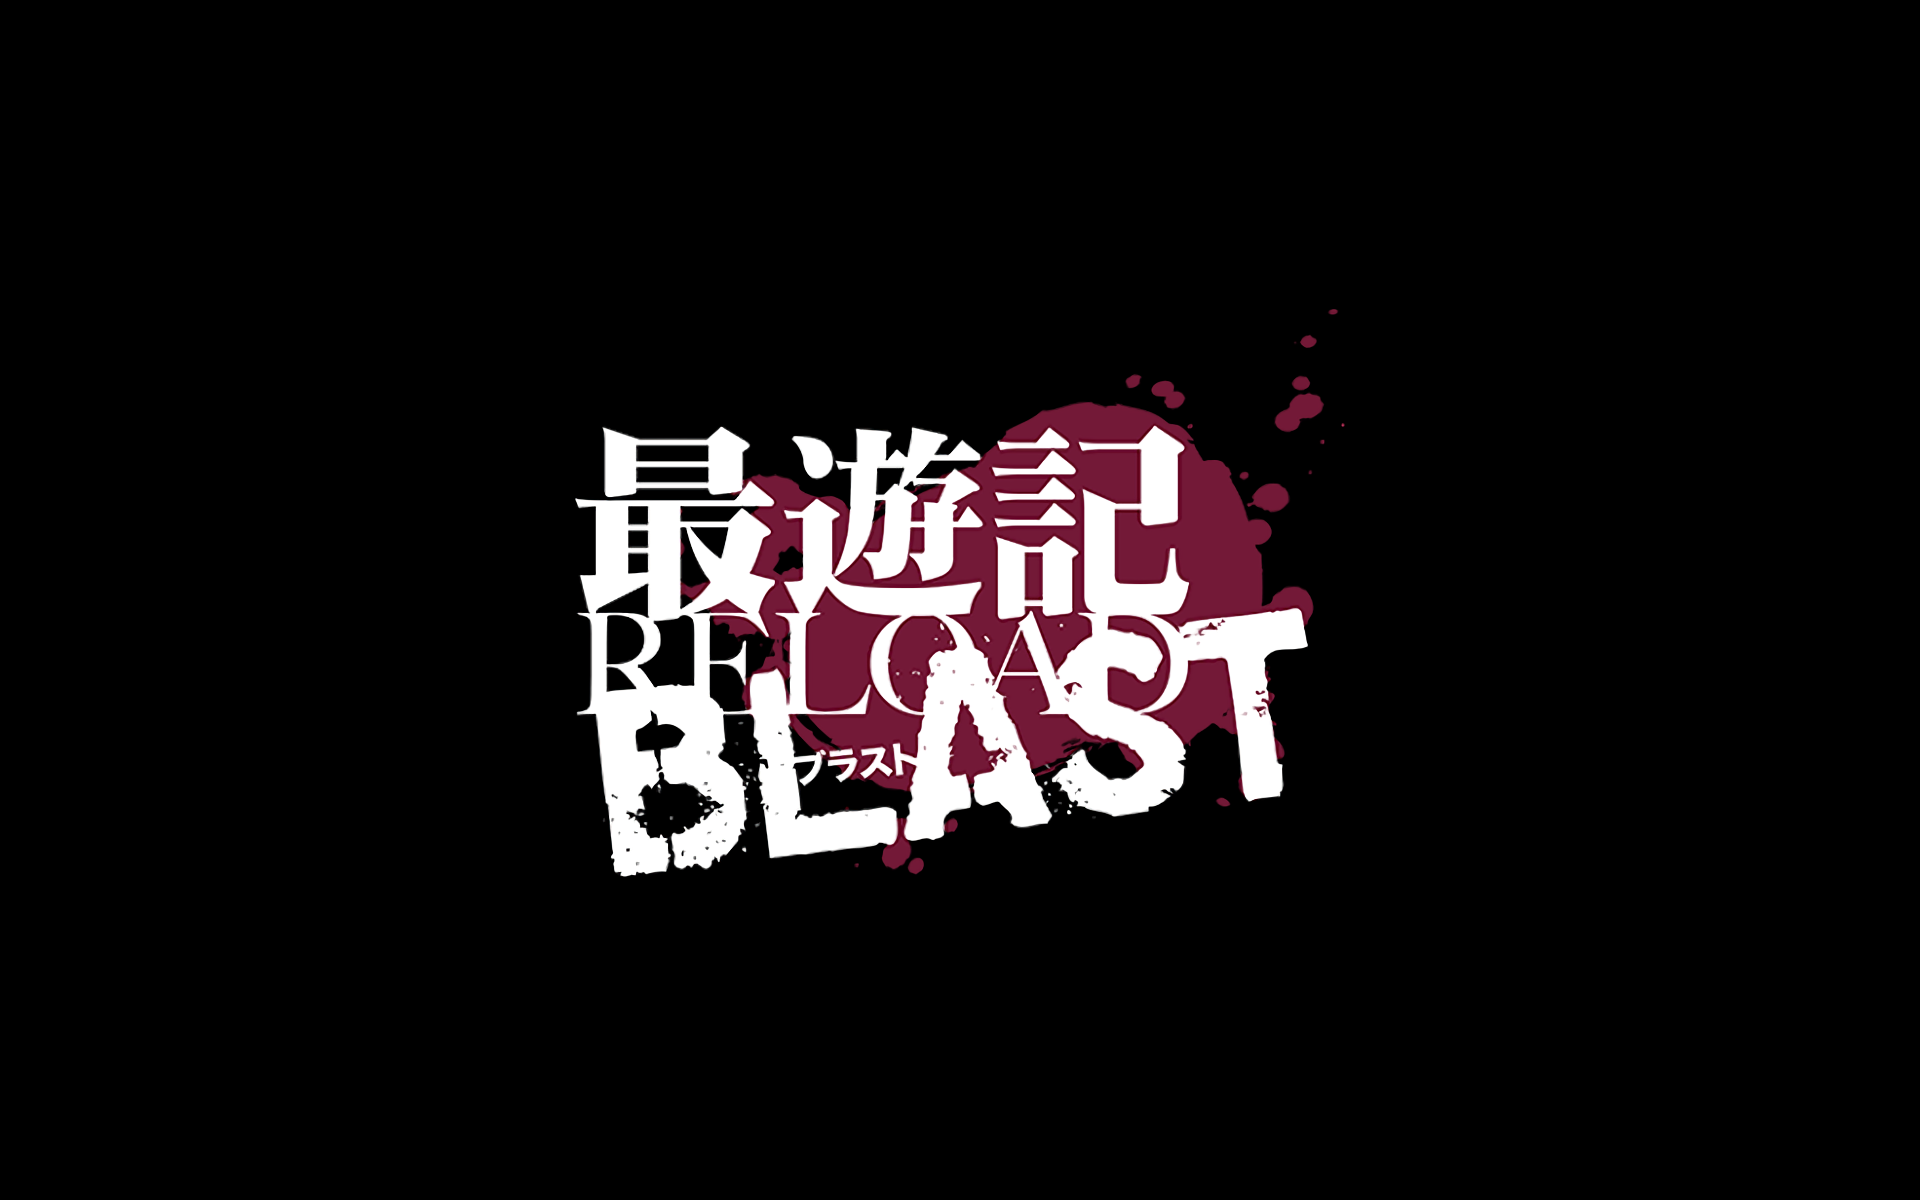 Saiyuuki Reload Blast HD Wallpapers and Backgrounds.